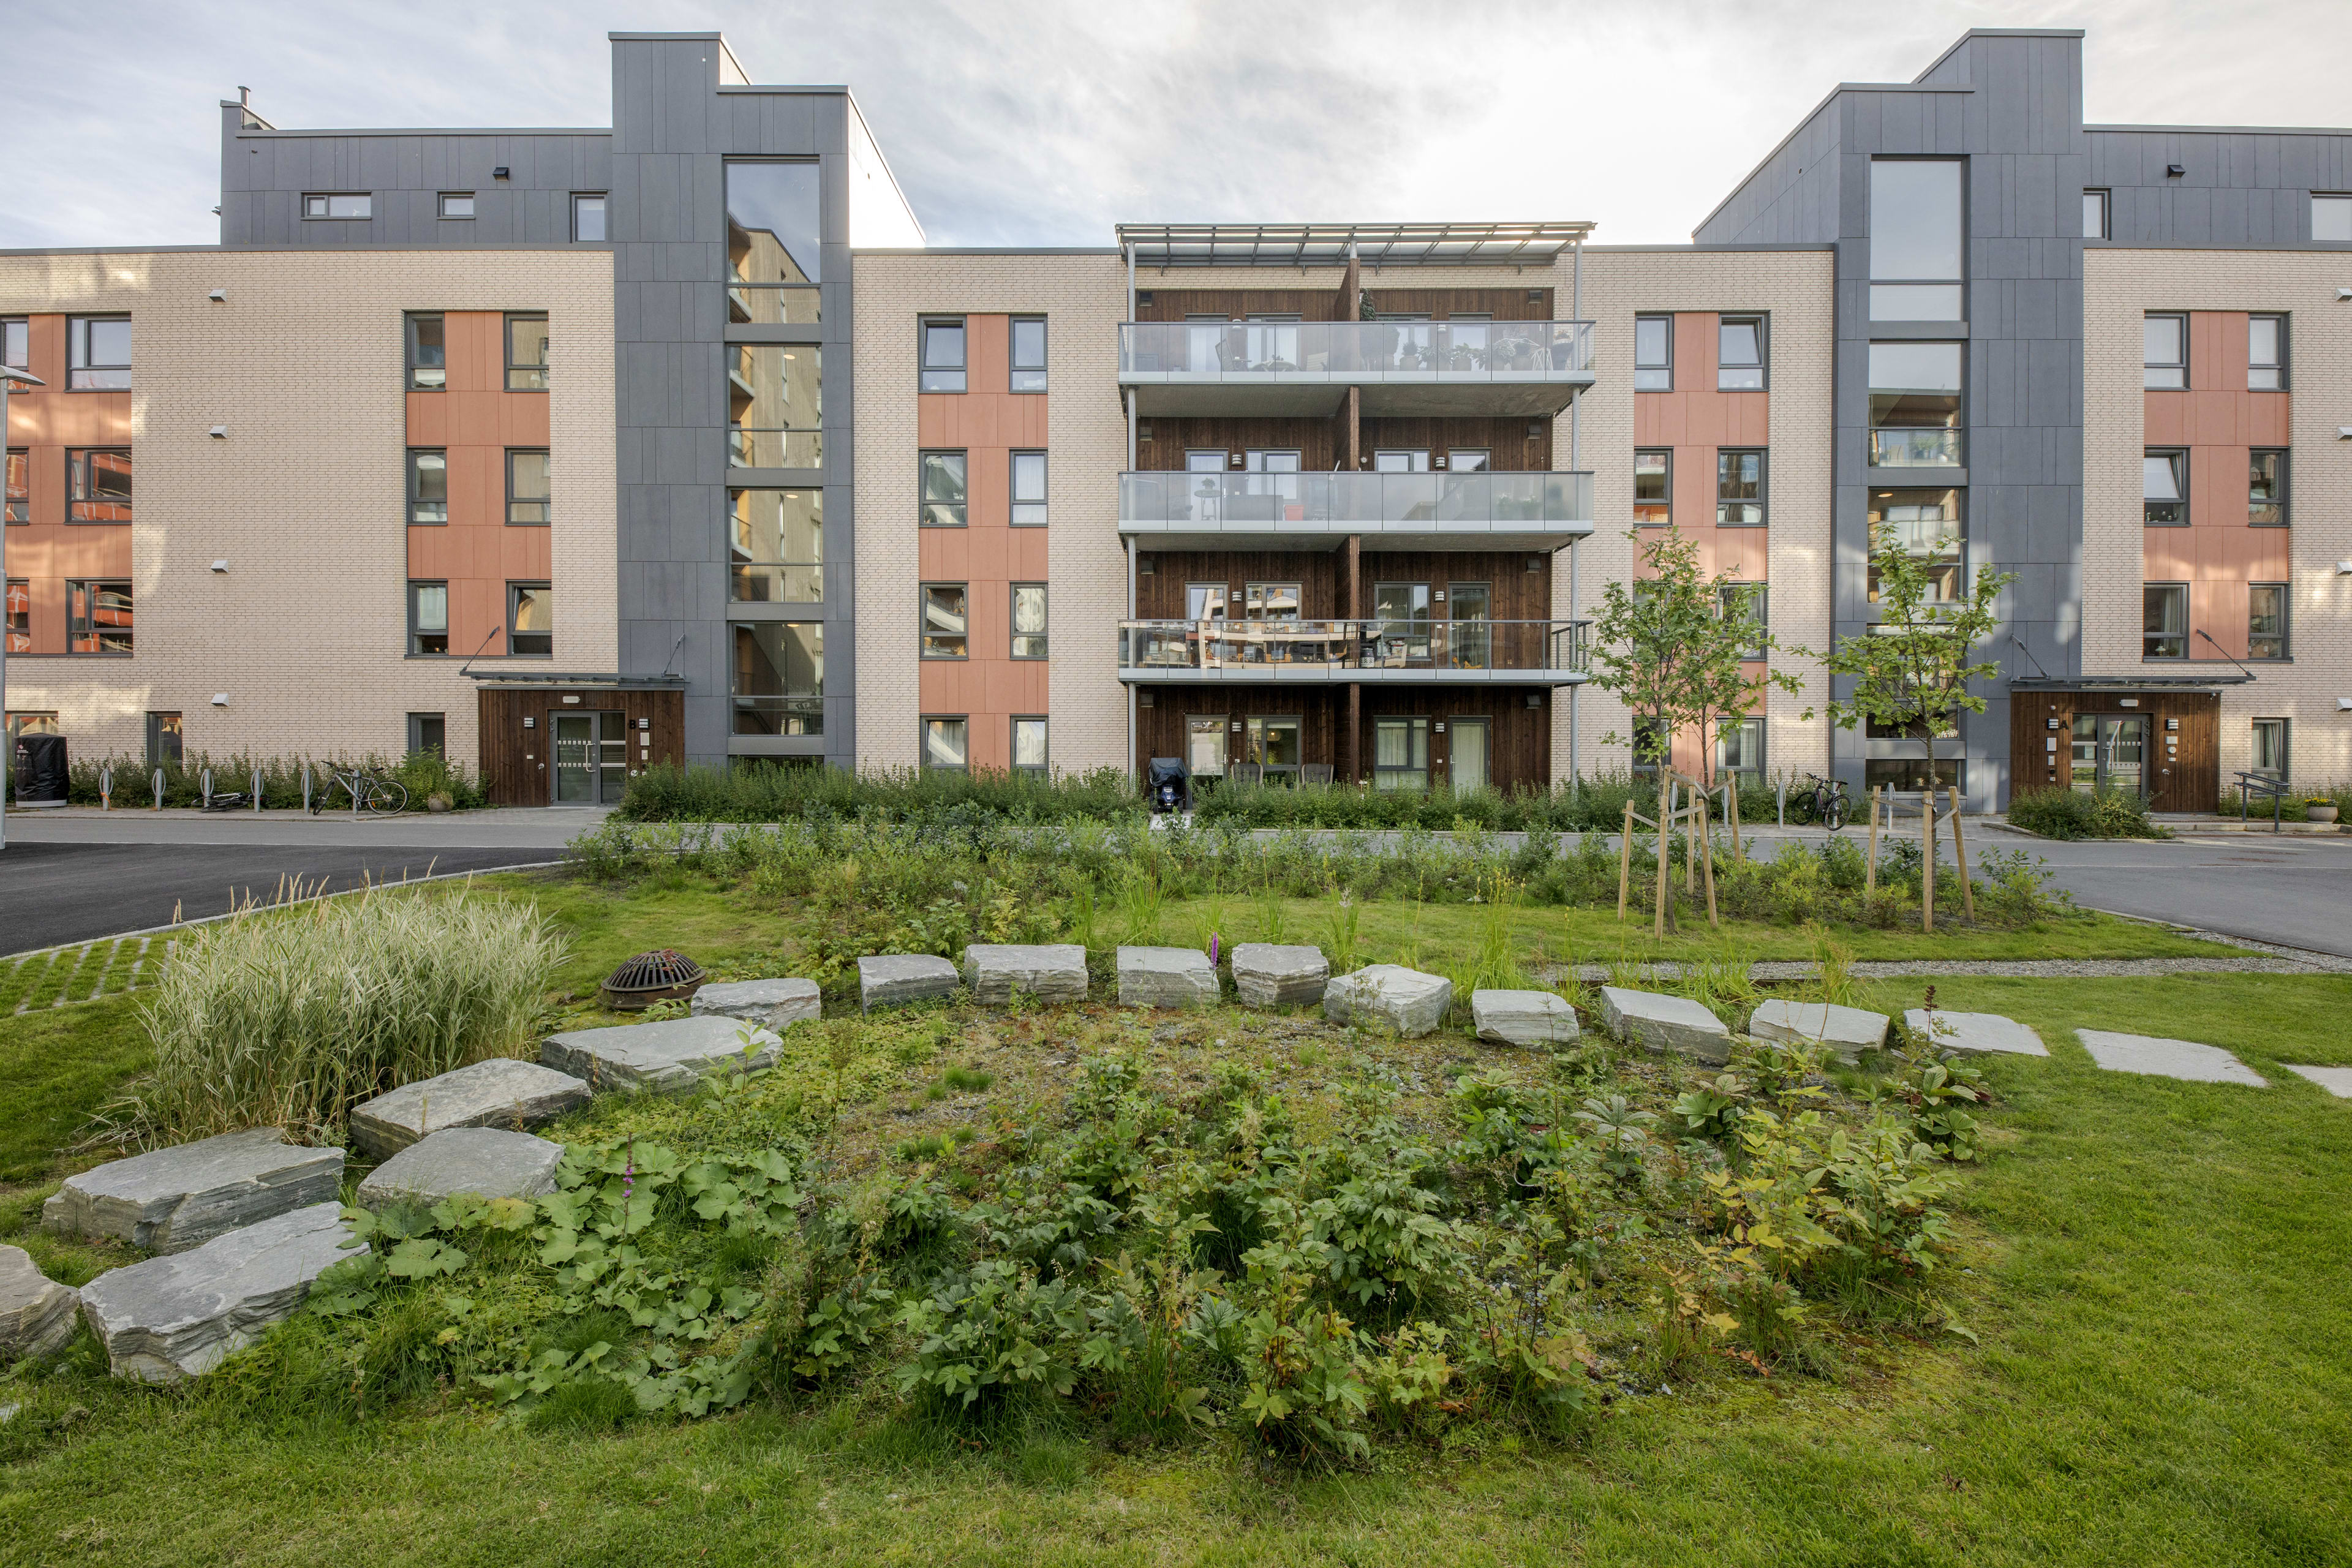 Foto av fasaden til byggene i Ladebyhagen med grønt område foran.